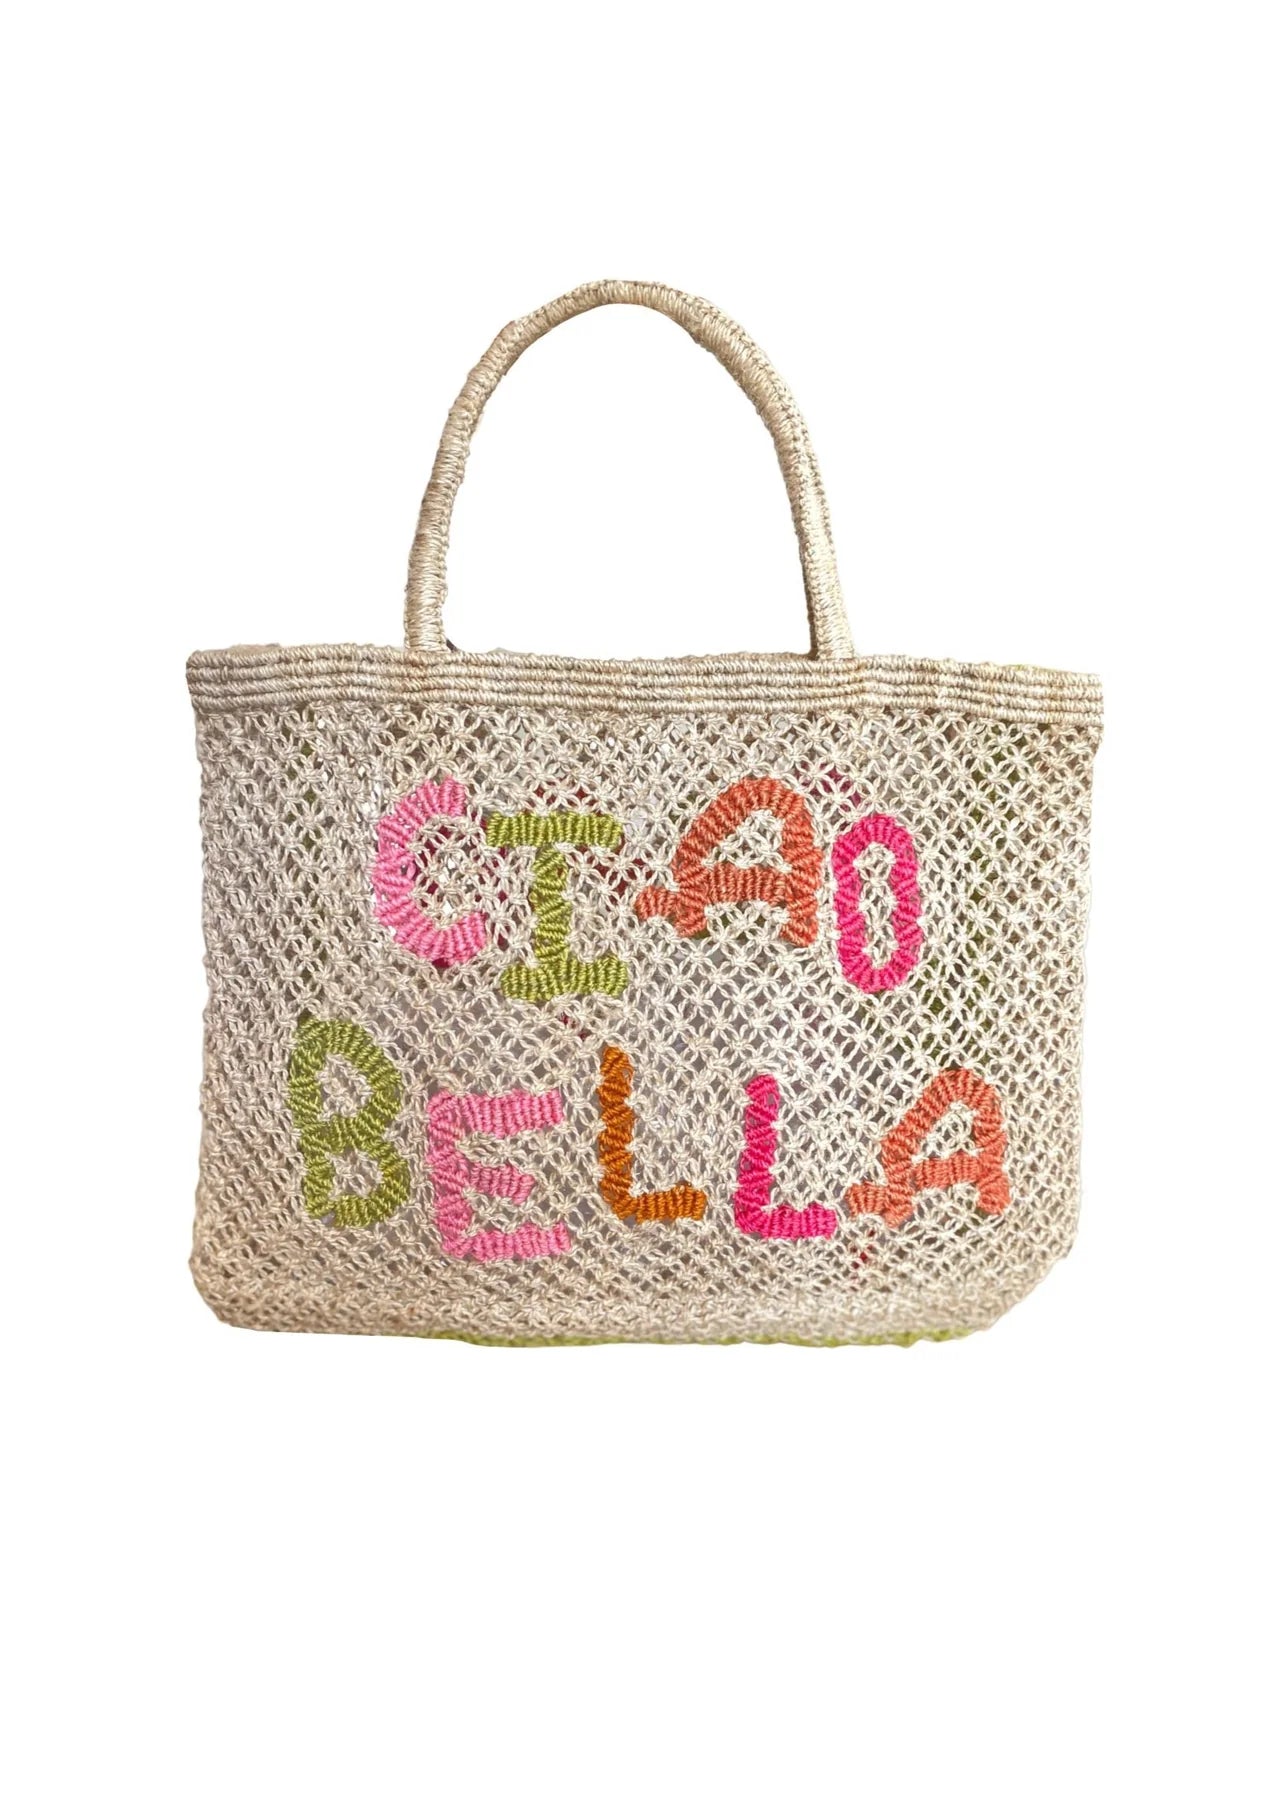 Ciao Bella Small Woven Bag